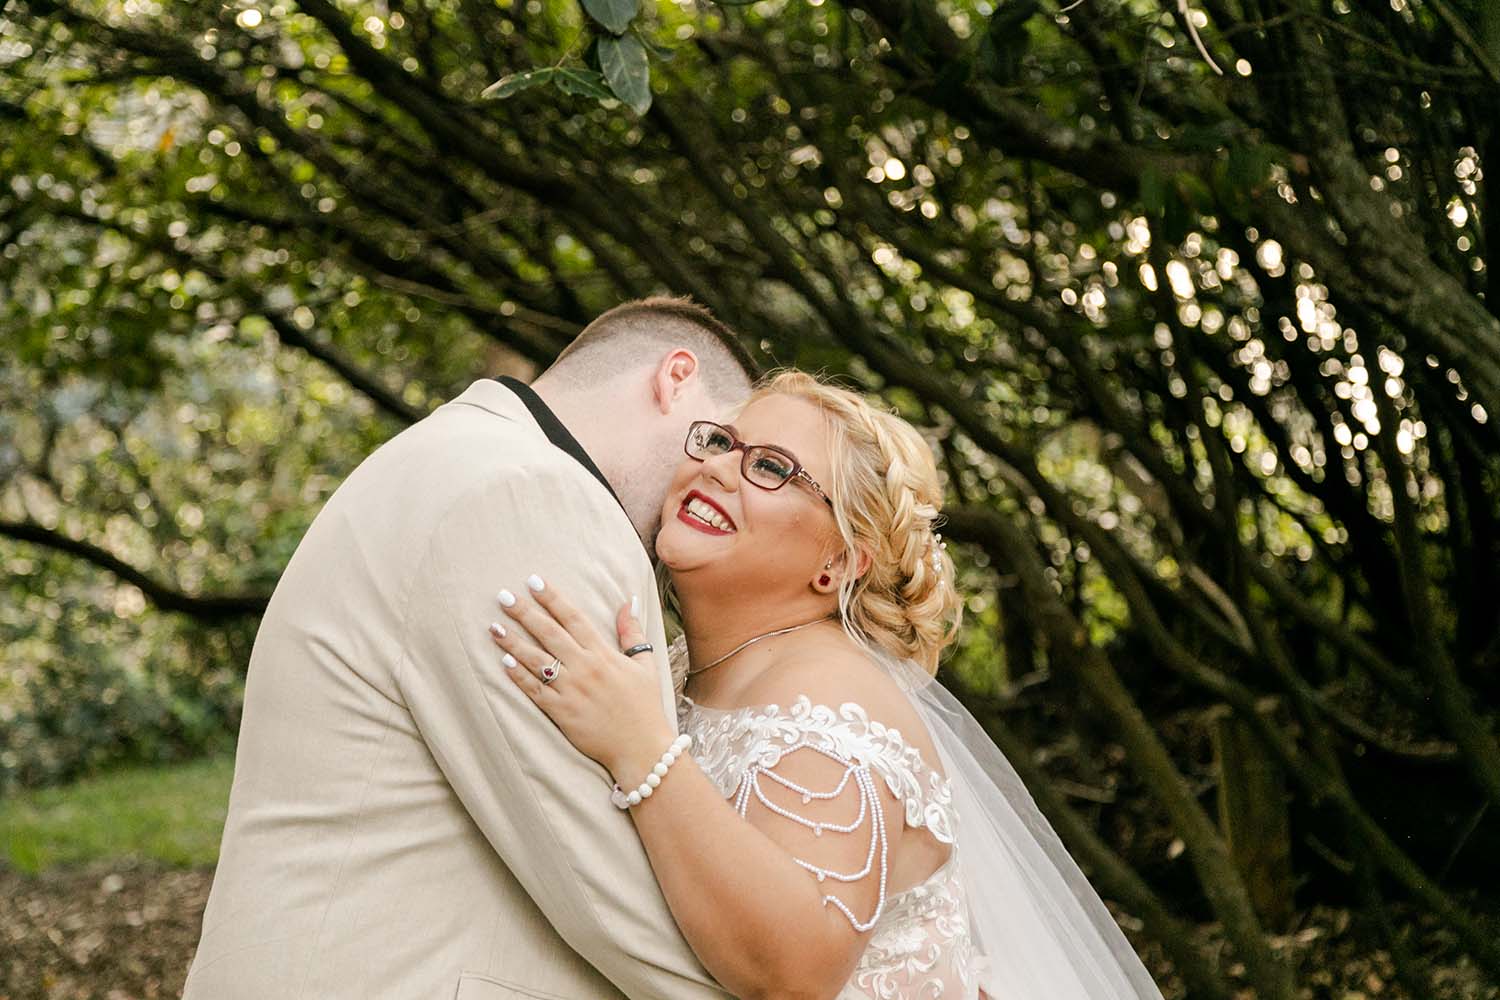 Destination Wedding Photography - couple embracing